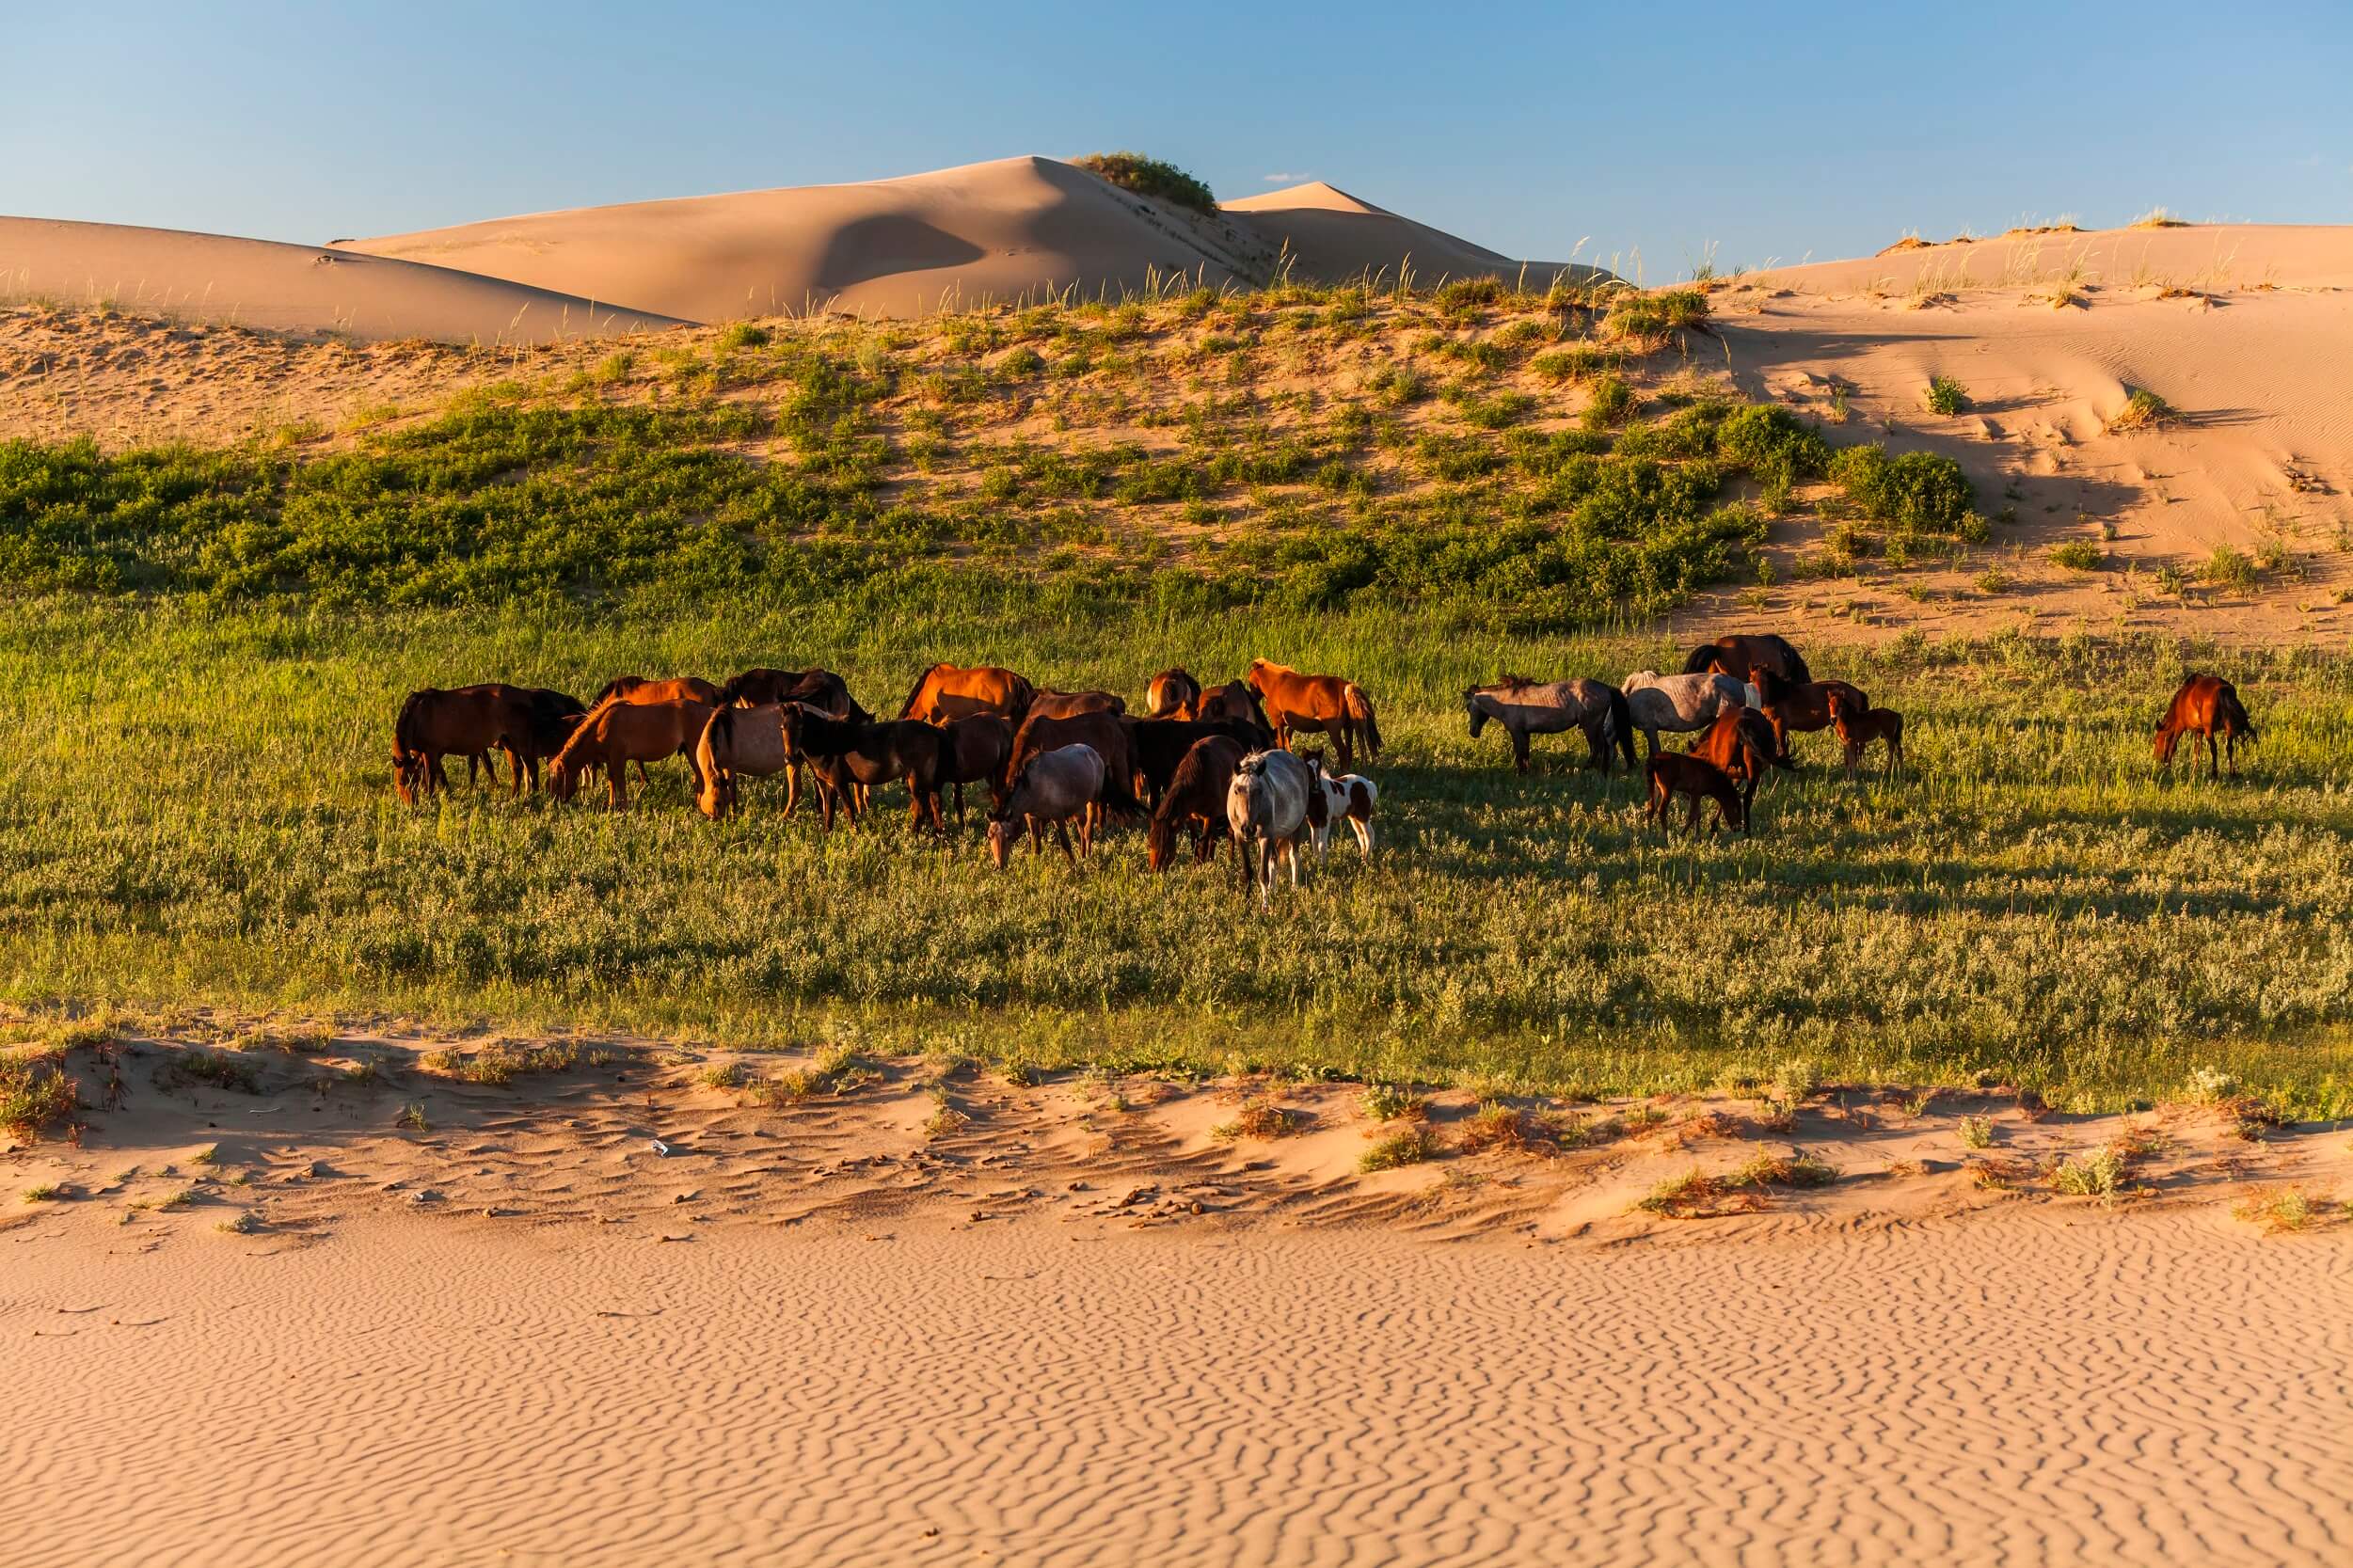 herd of wild horses in the desert 2022 05 25 01 46 19 utc 1